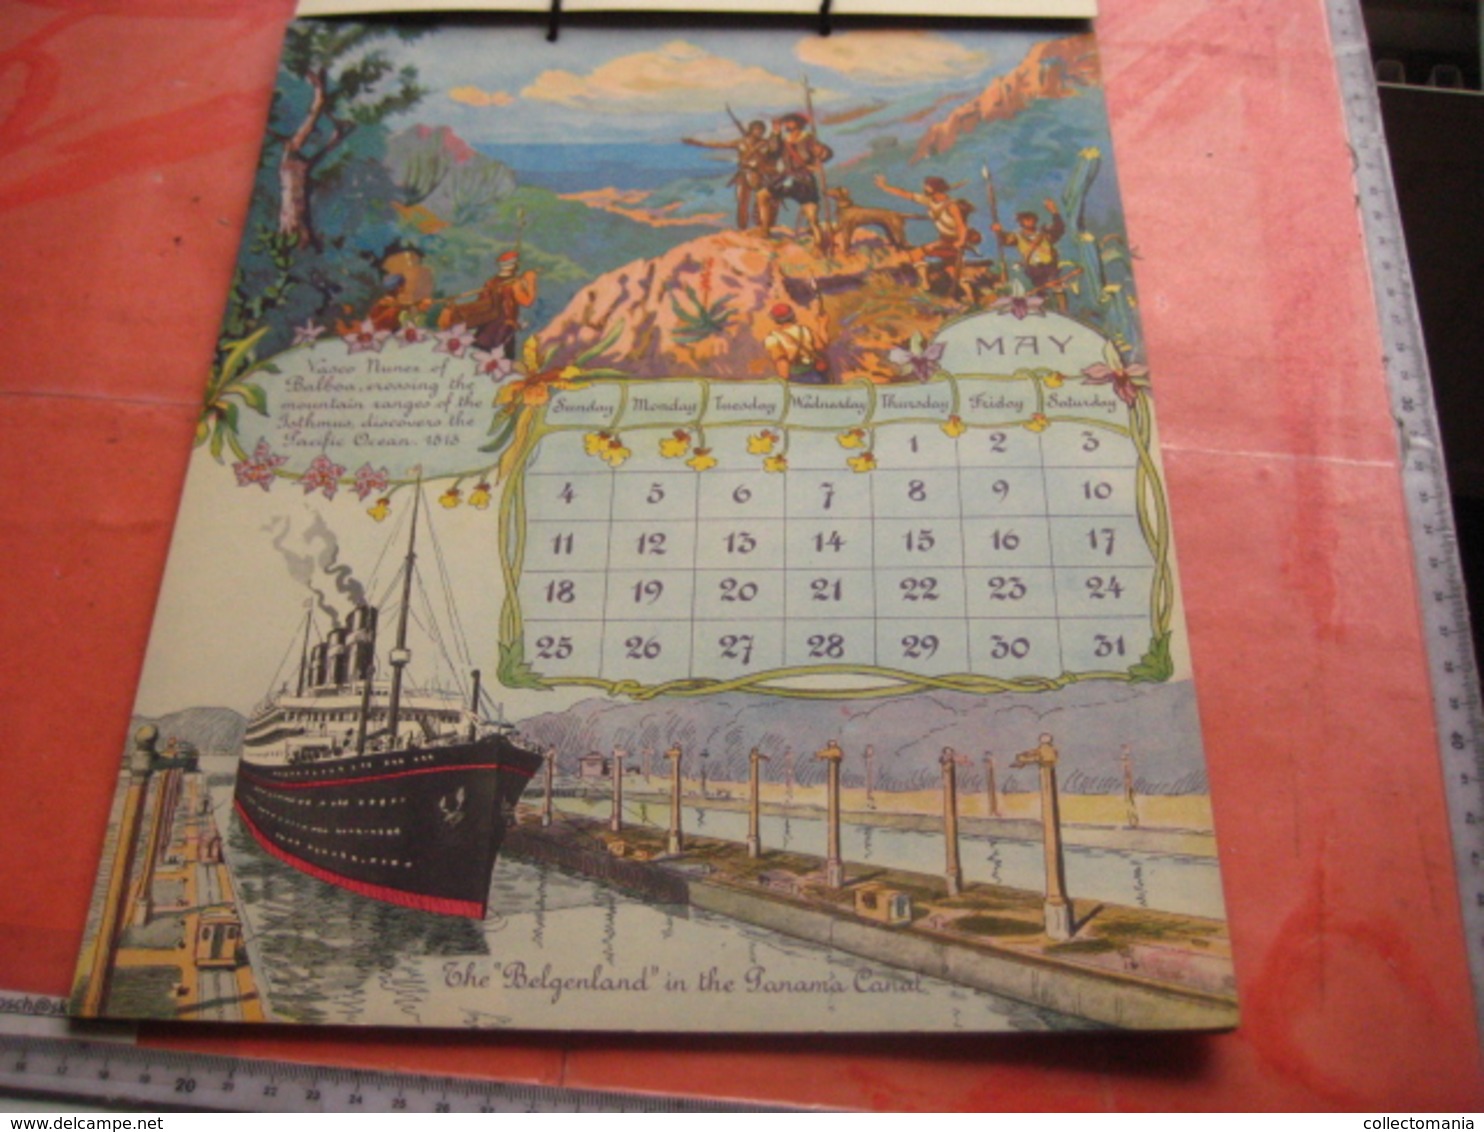 1930 Almanac Red Star Line World Cruise shipping Calendar 12 months - illustrator FREINET Belgenland  Antwerpen VG ship